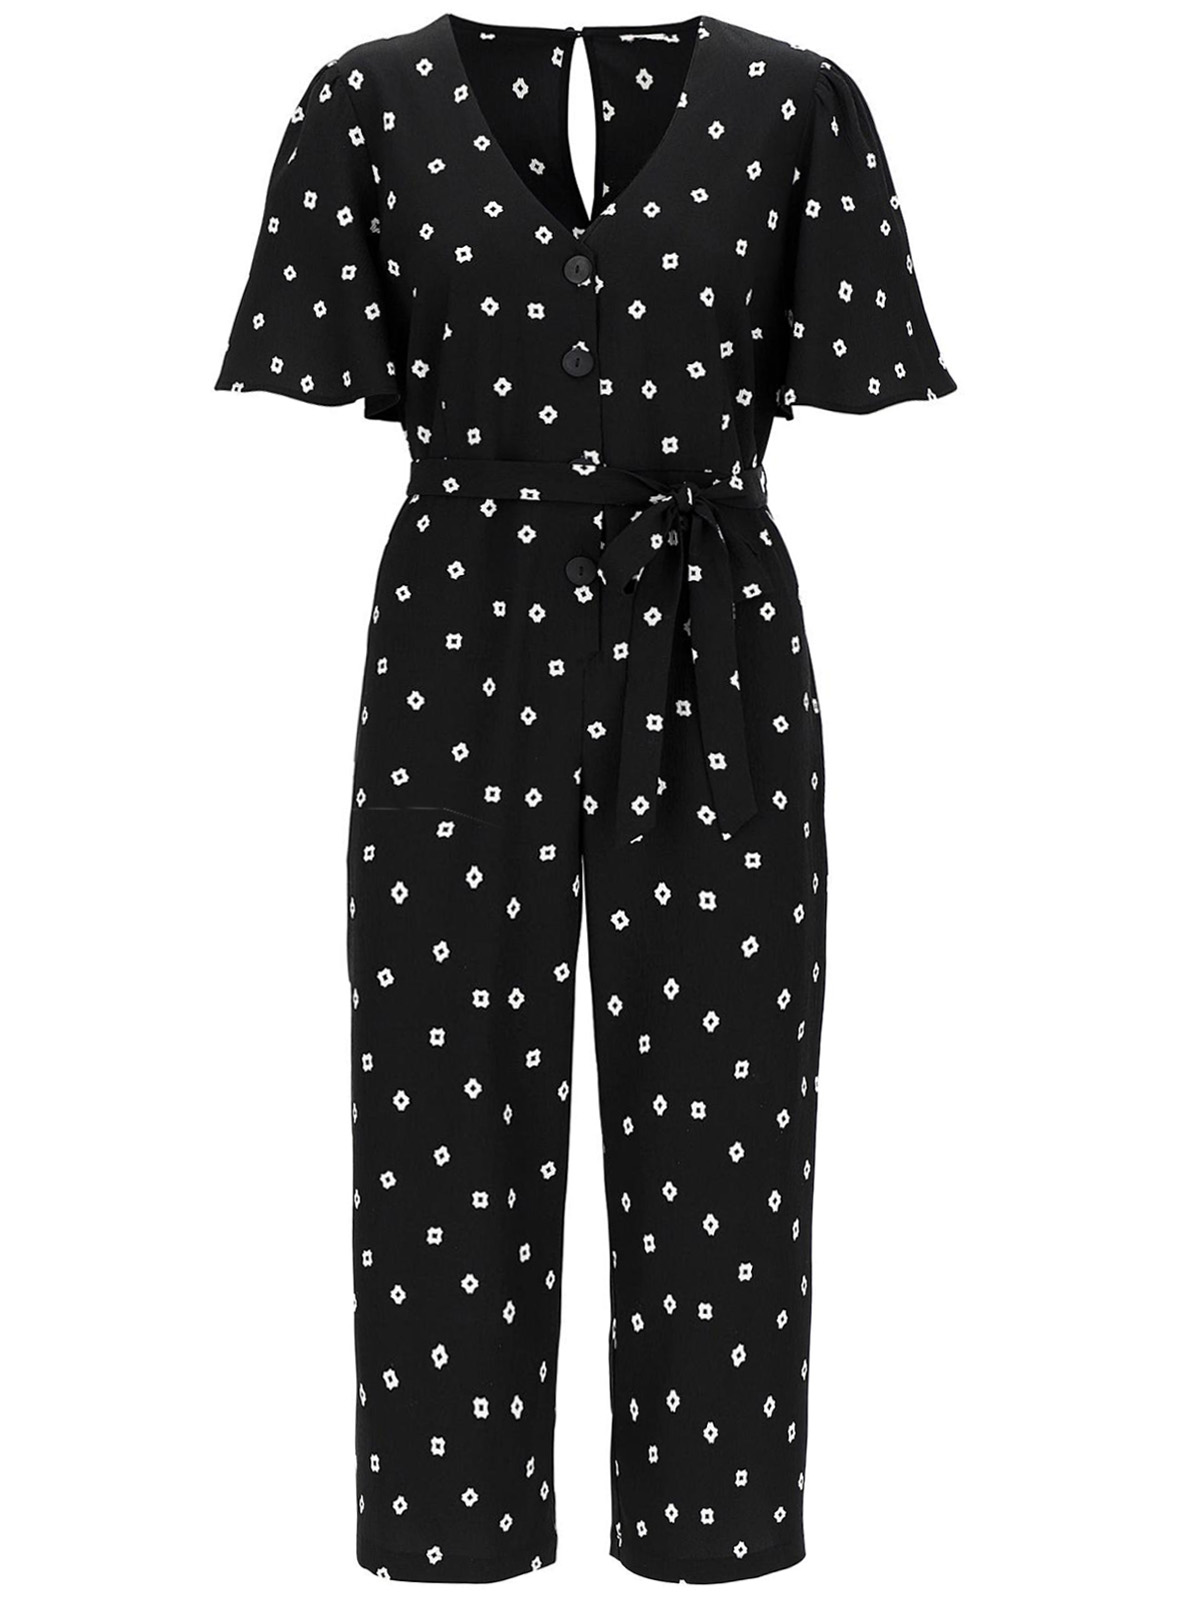 Women's Navy Polka Dot Jumpsuit, Beige Straw Clutch, Black Sunglasses |  Lookastic